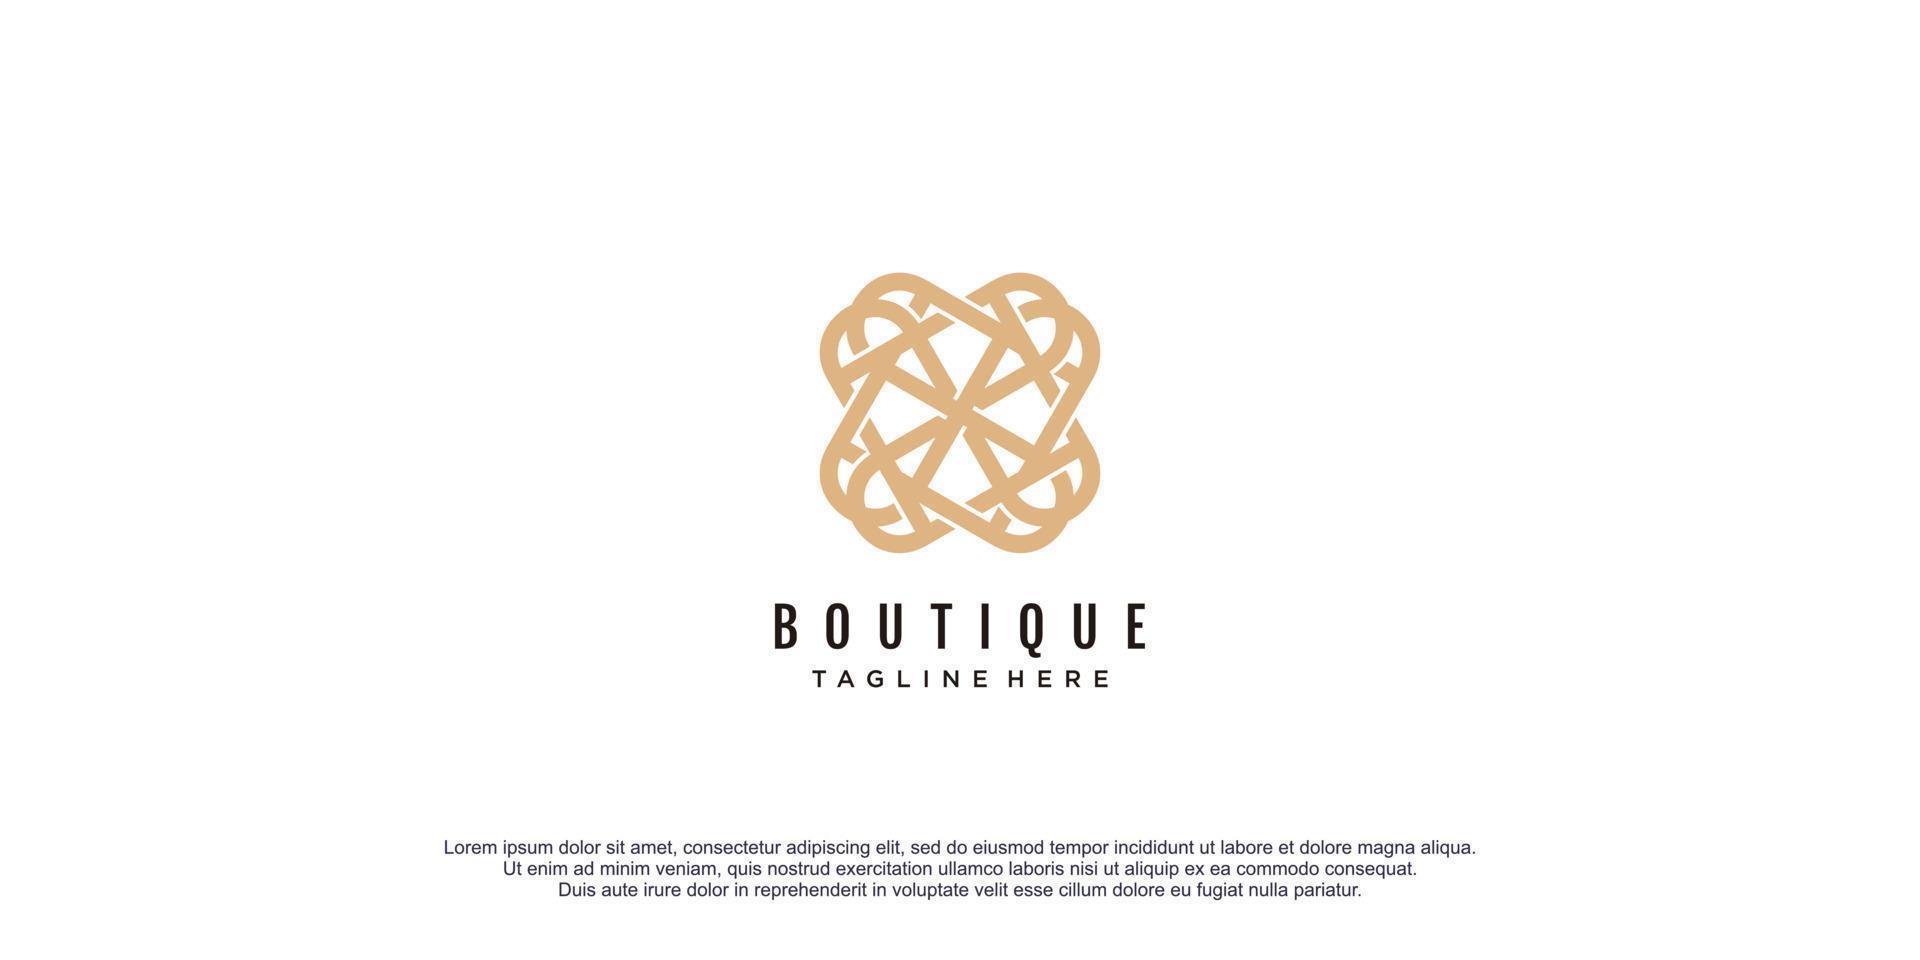 Boutique logo with creative concept design icon vector illustration